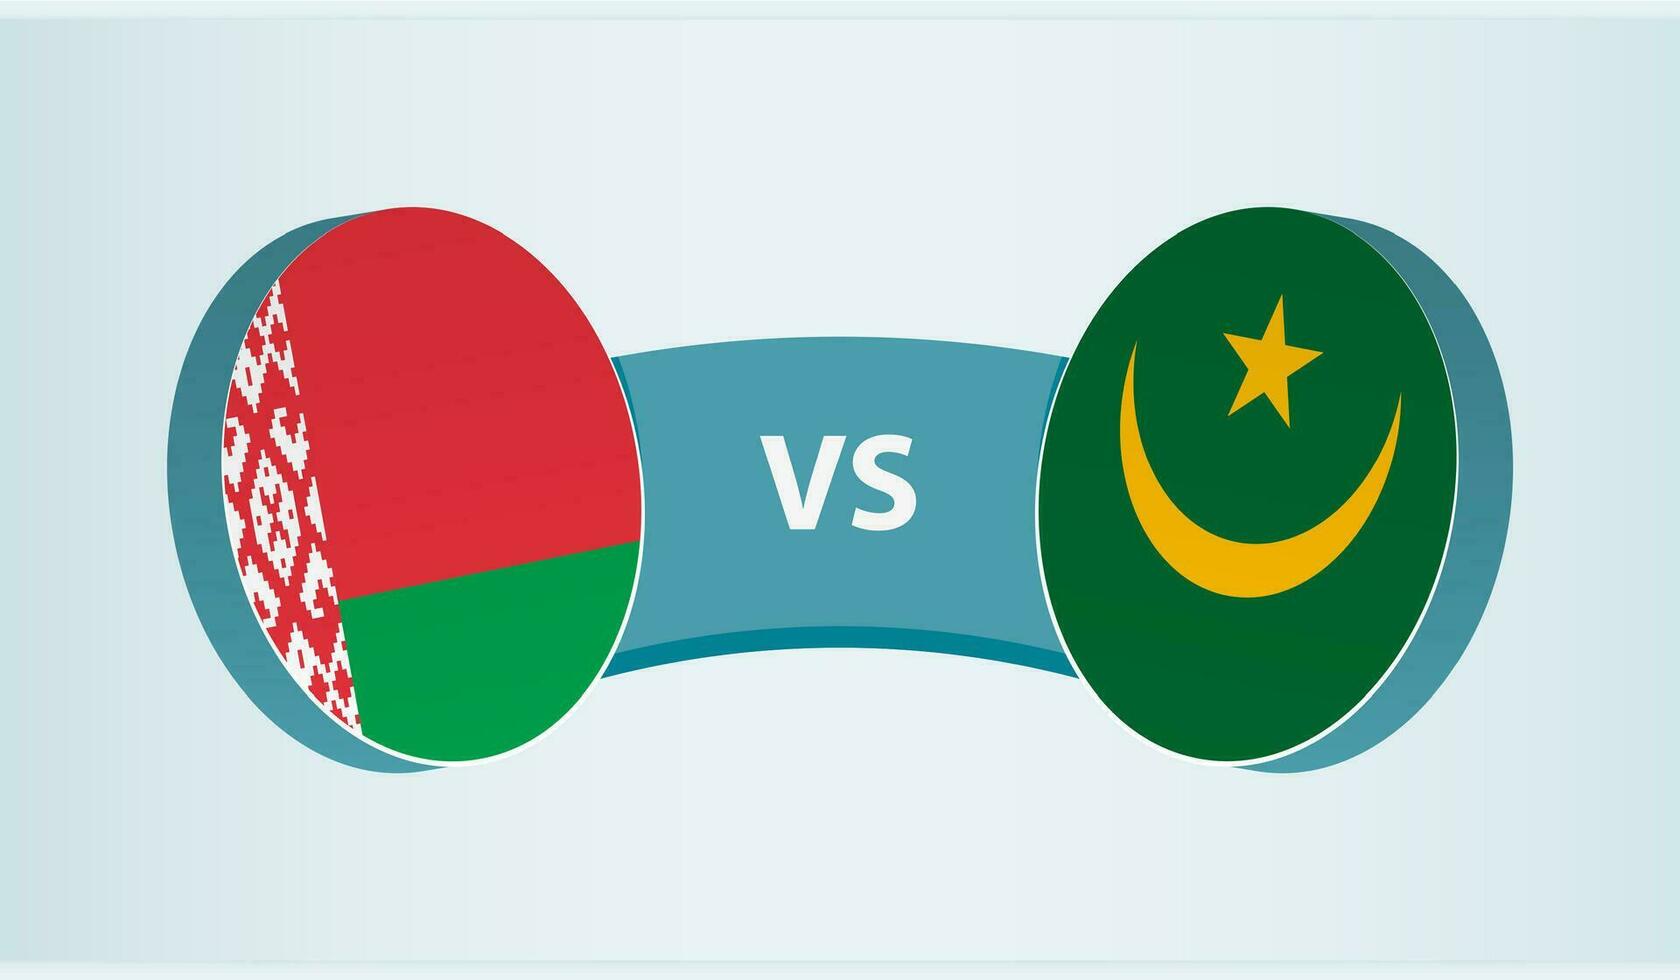 Belarus versus Mauritania, team sports competition concept. vector